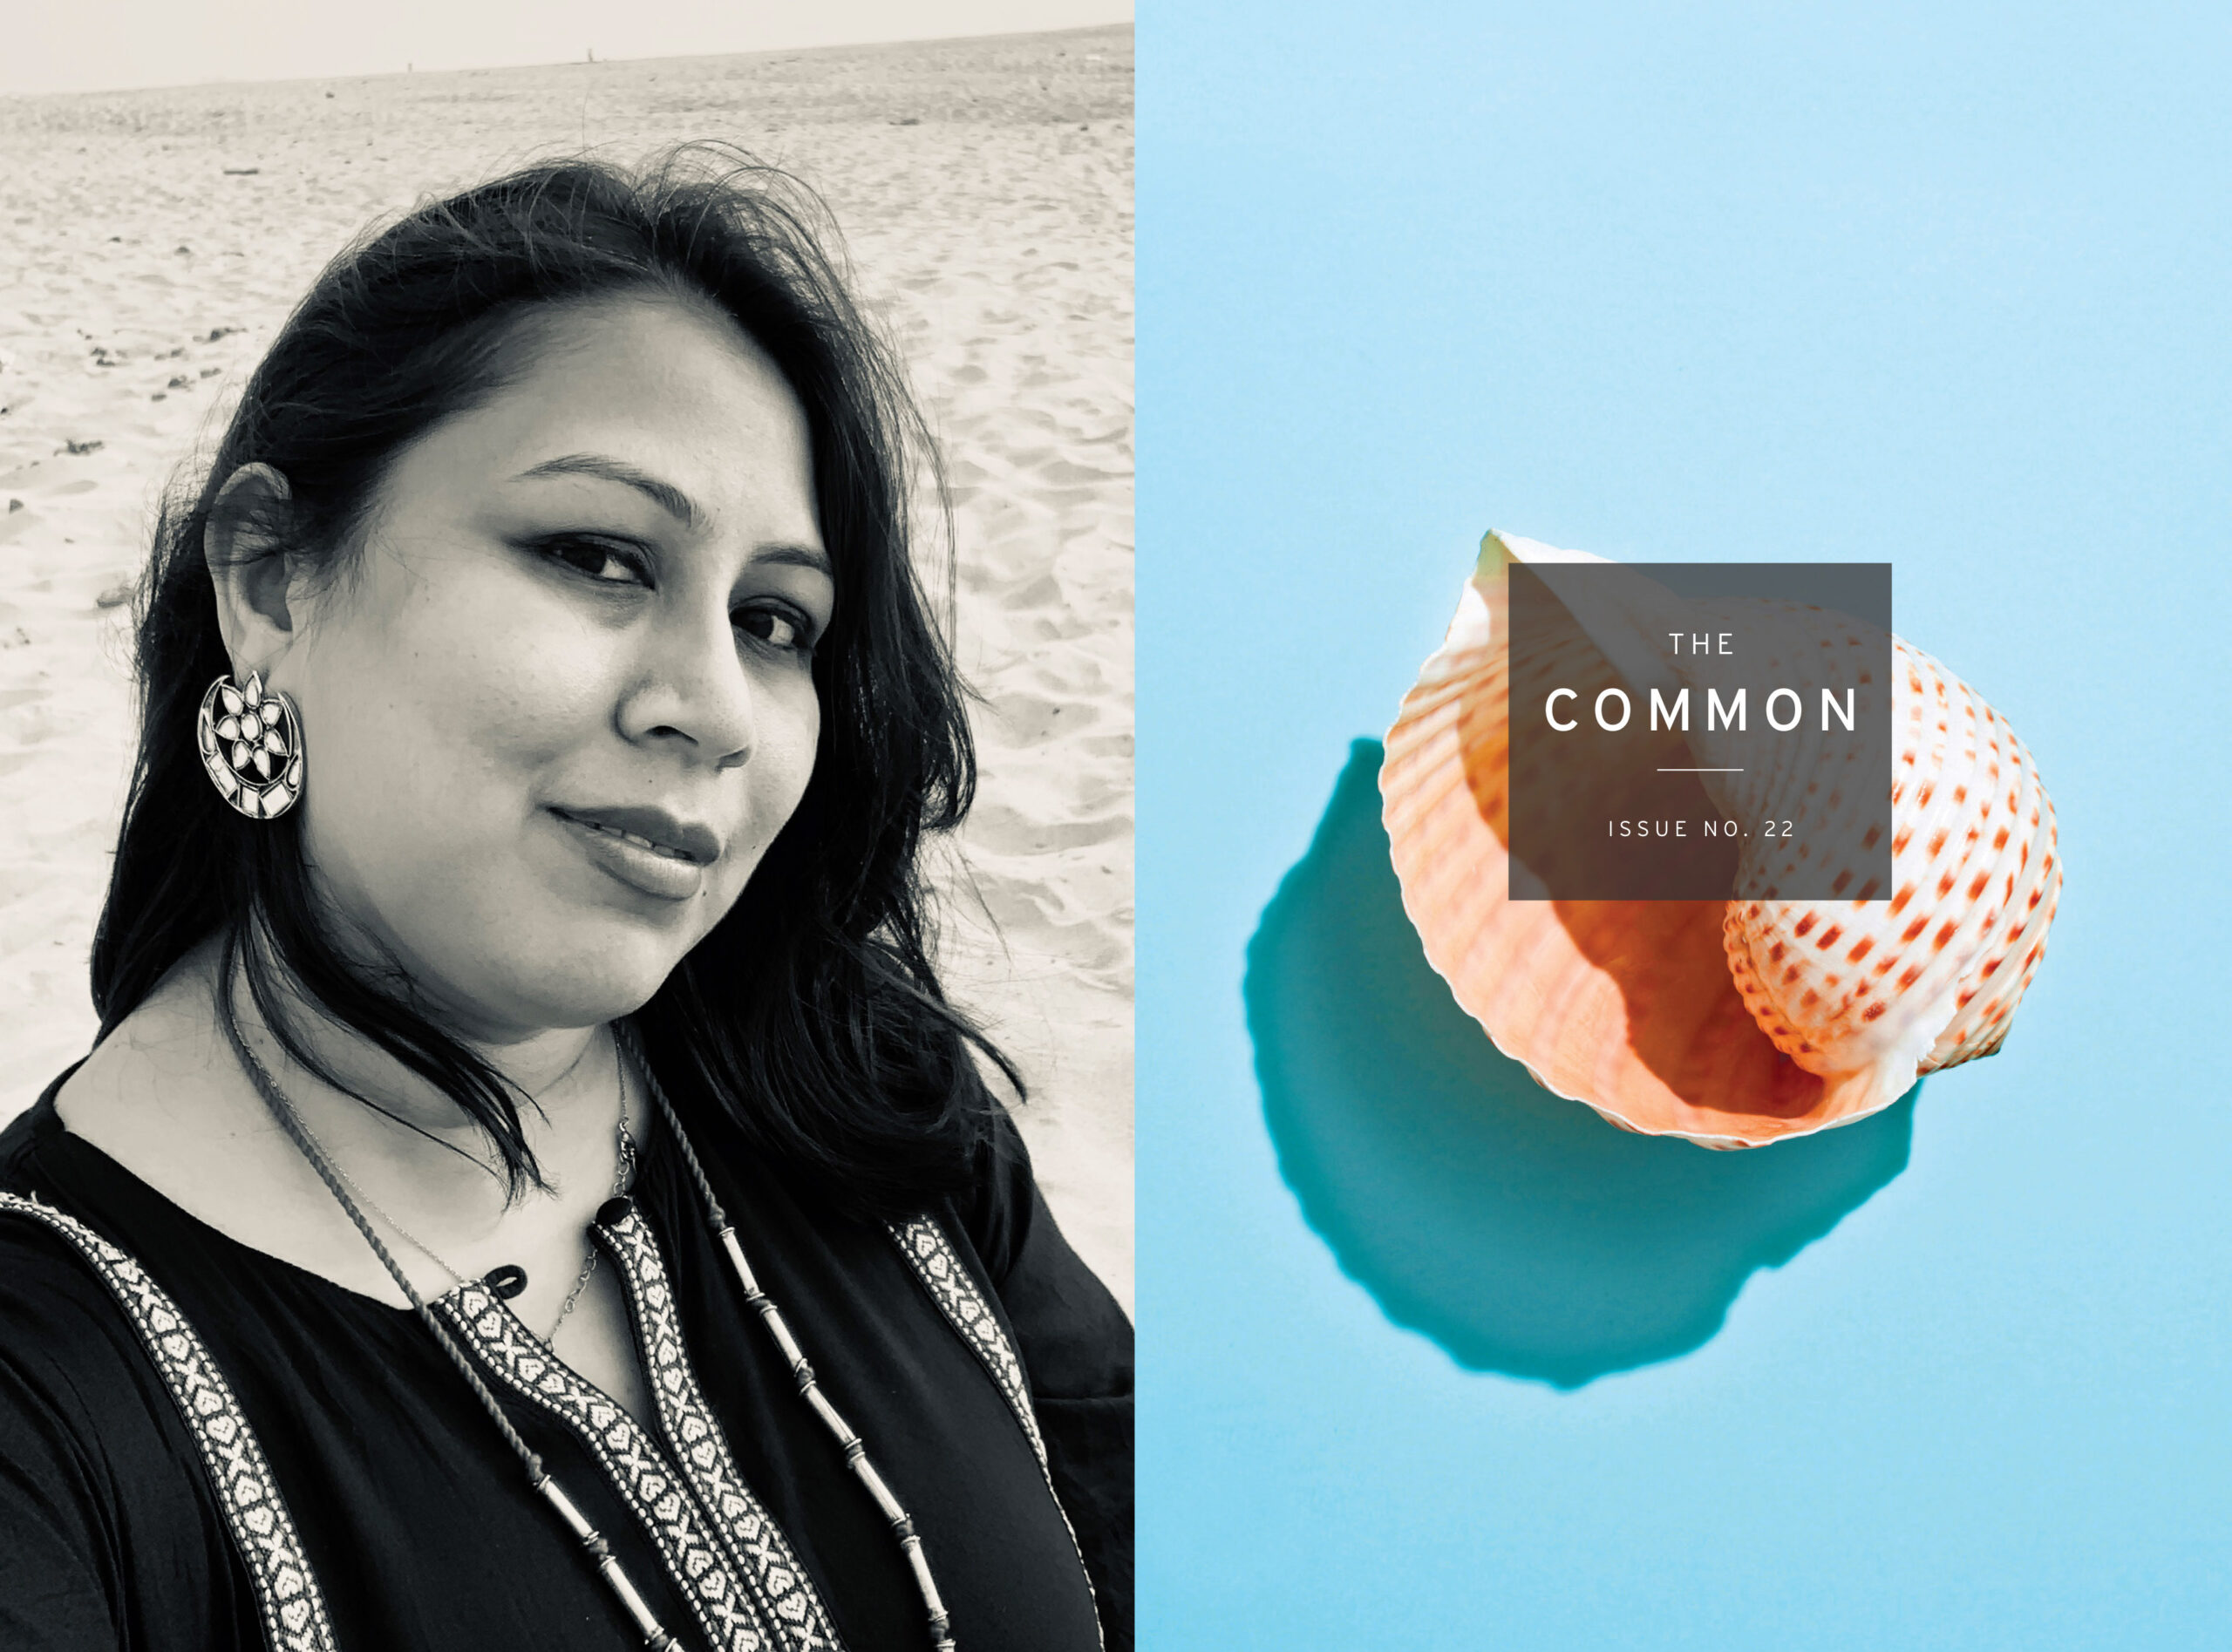 Podcast: Priyanka Sacheti on “Oman is Mars: An Alien All Along”